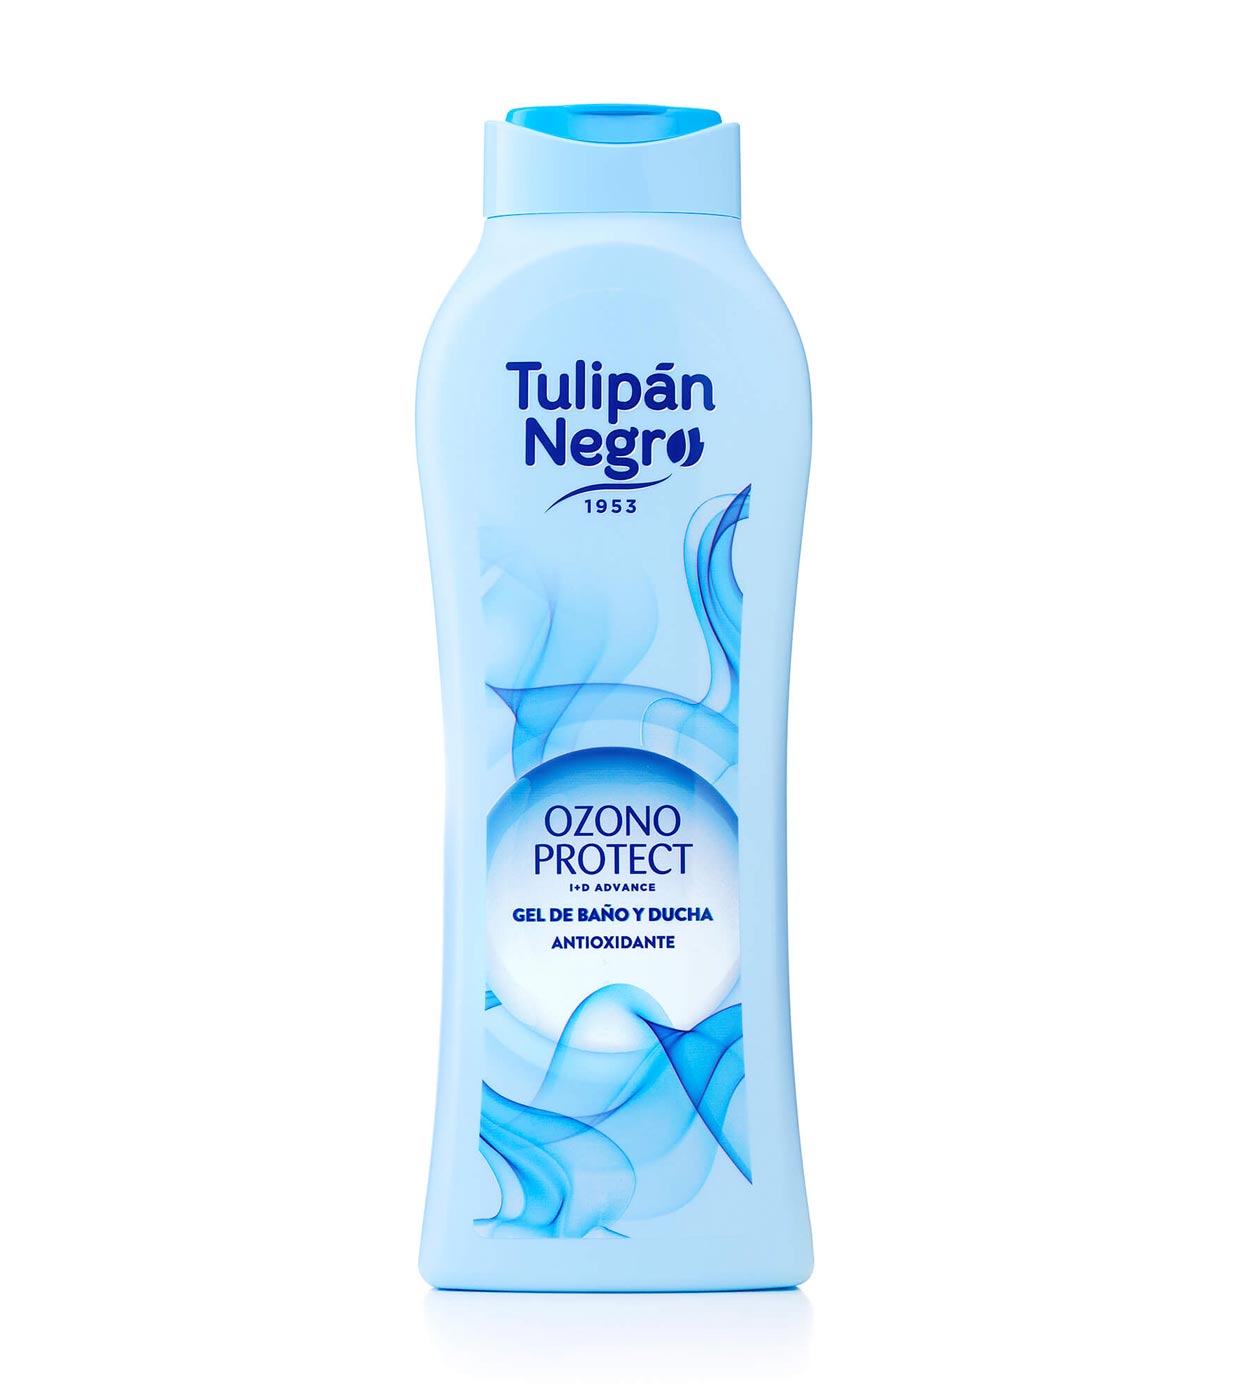 Tulipan Negro® Shampoo with milk protein